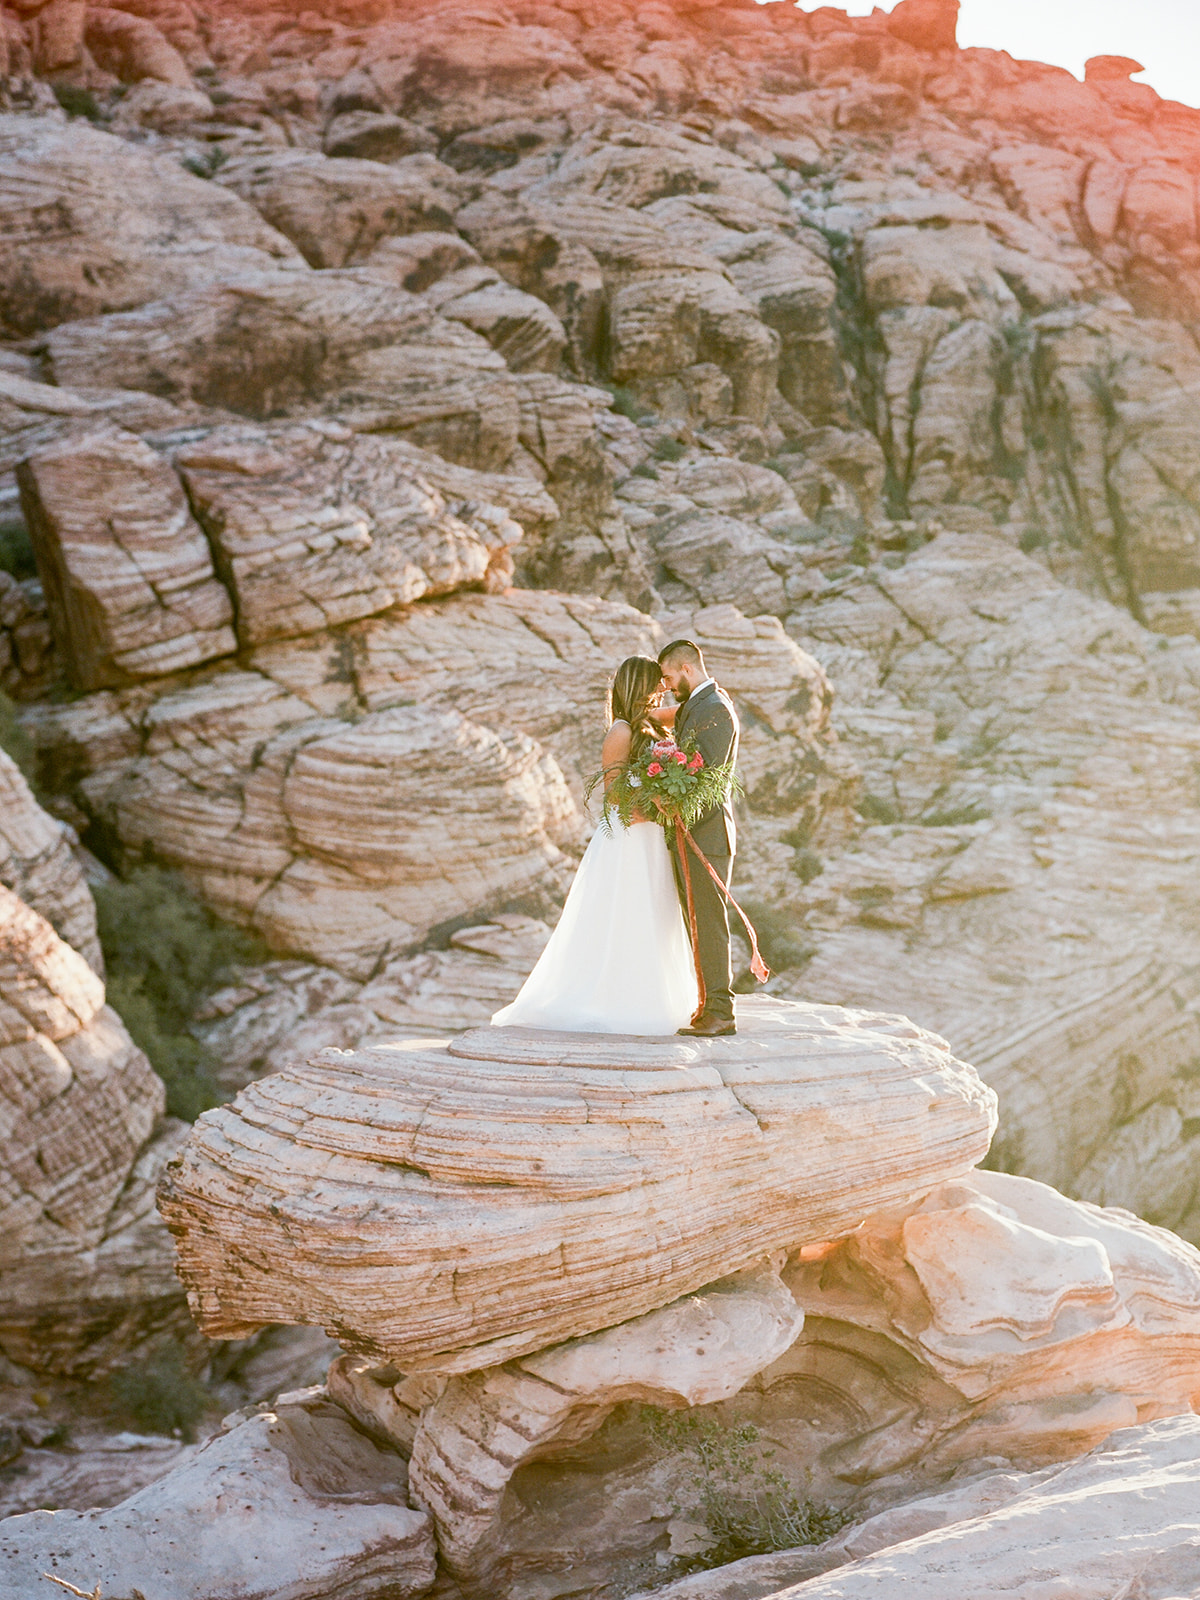 Elopements, intimate wedding photography, red rocks las vegas